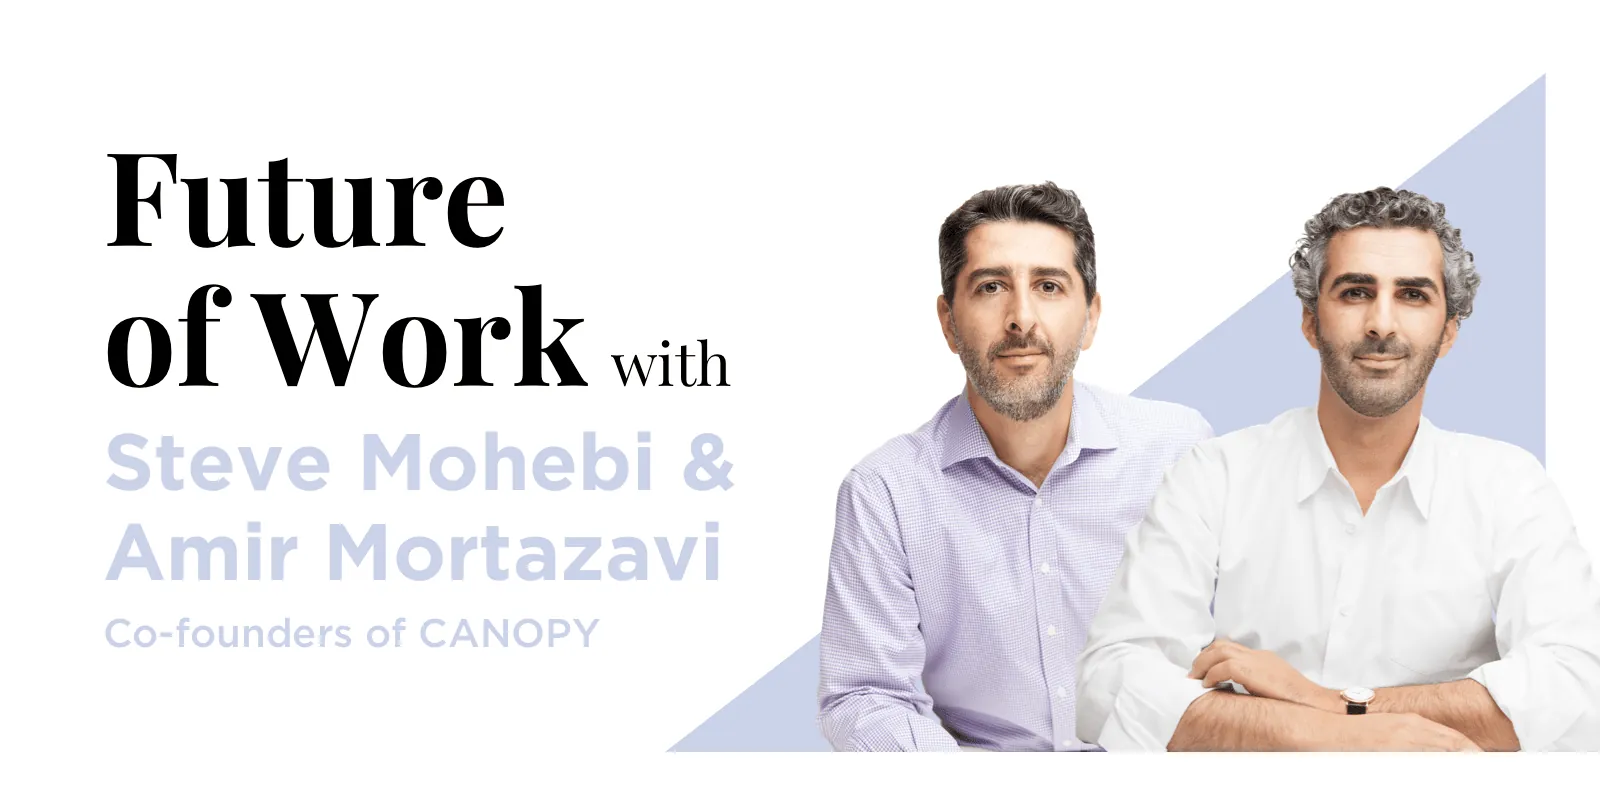 Future of work with Steve Mohebi and Amir Mortazavi